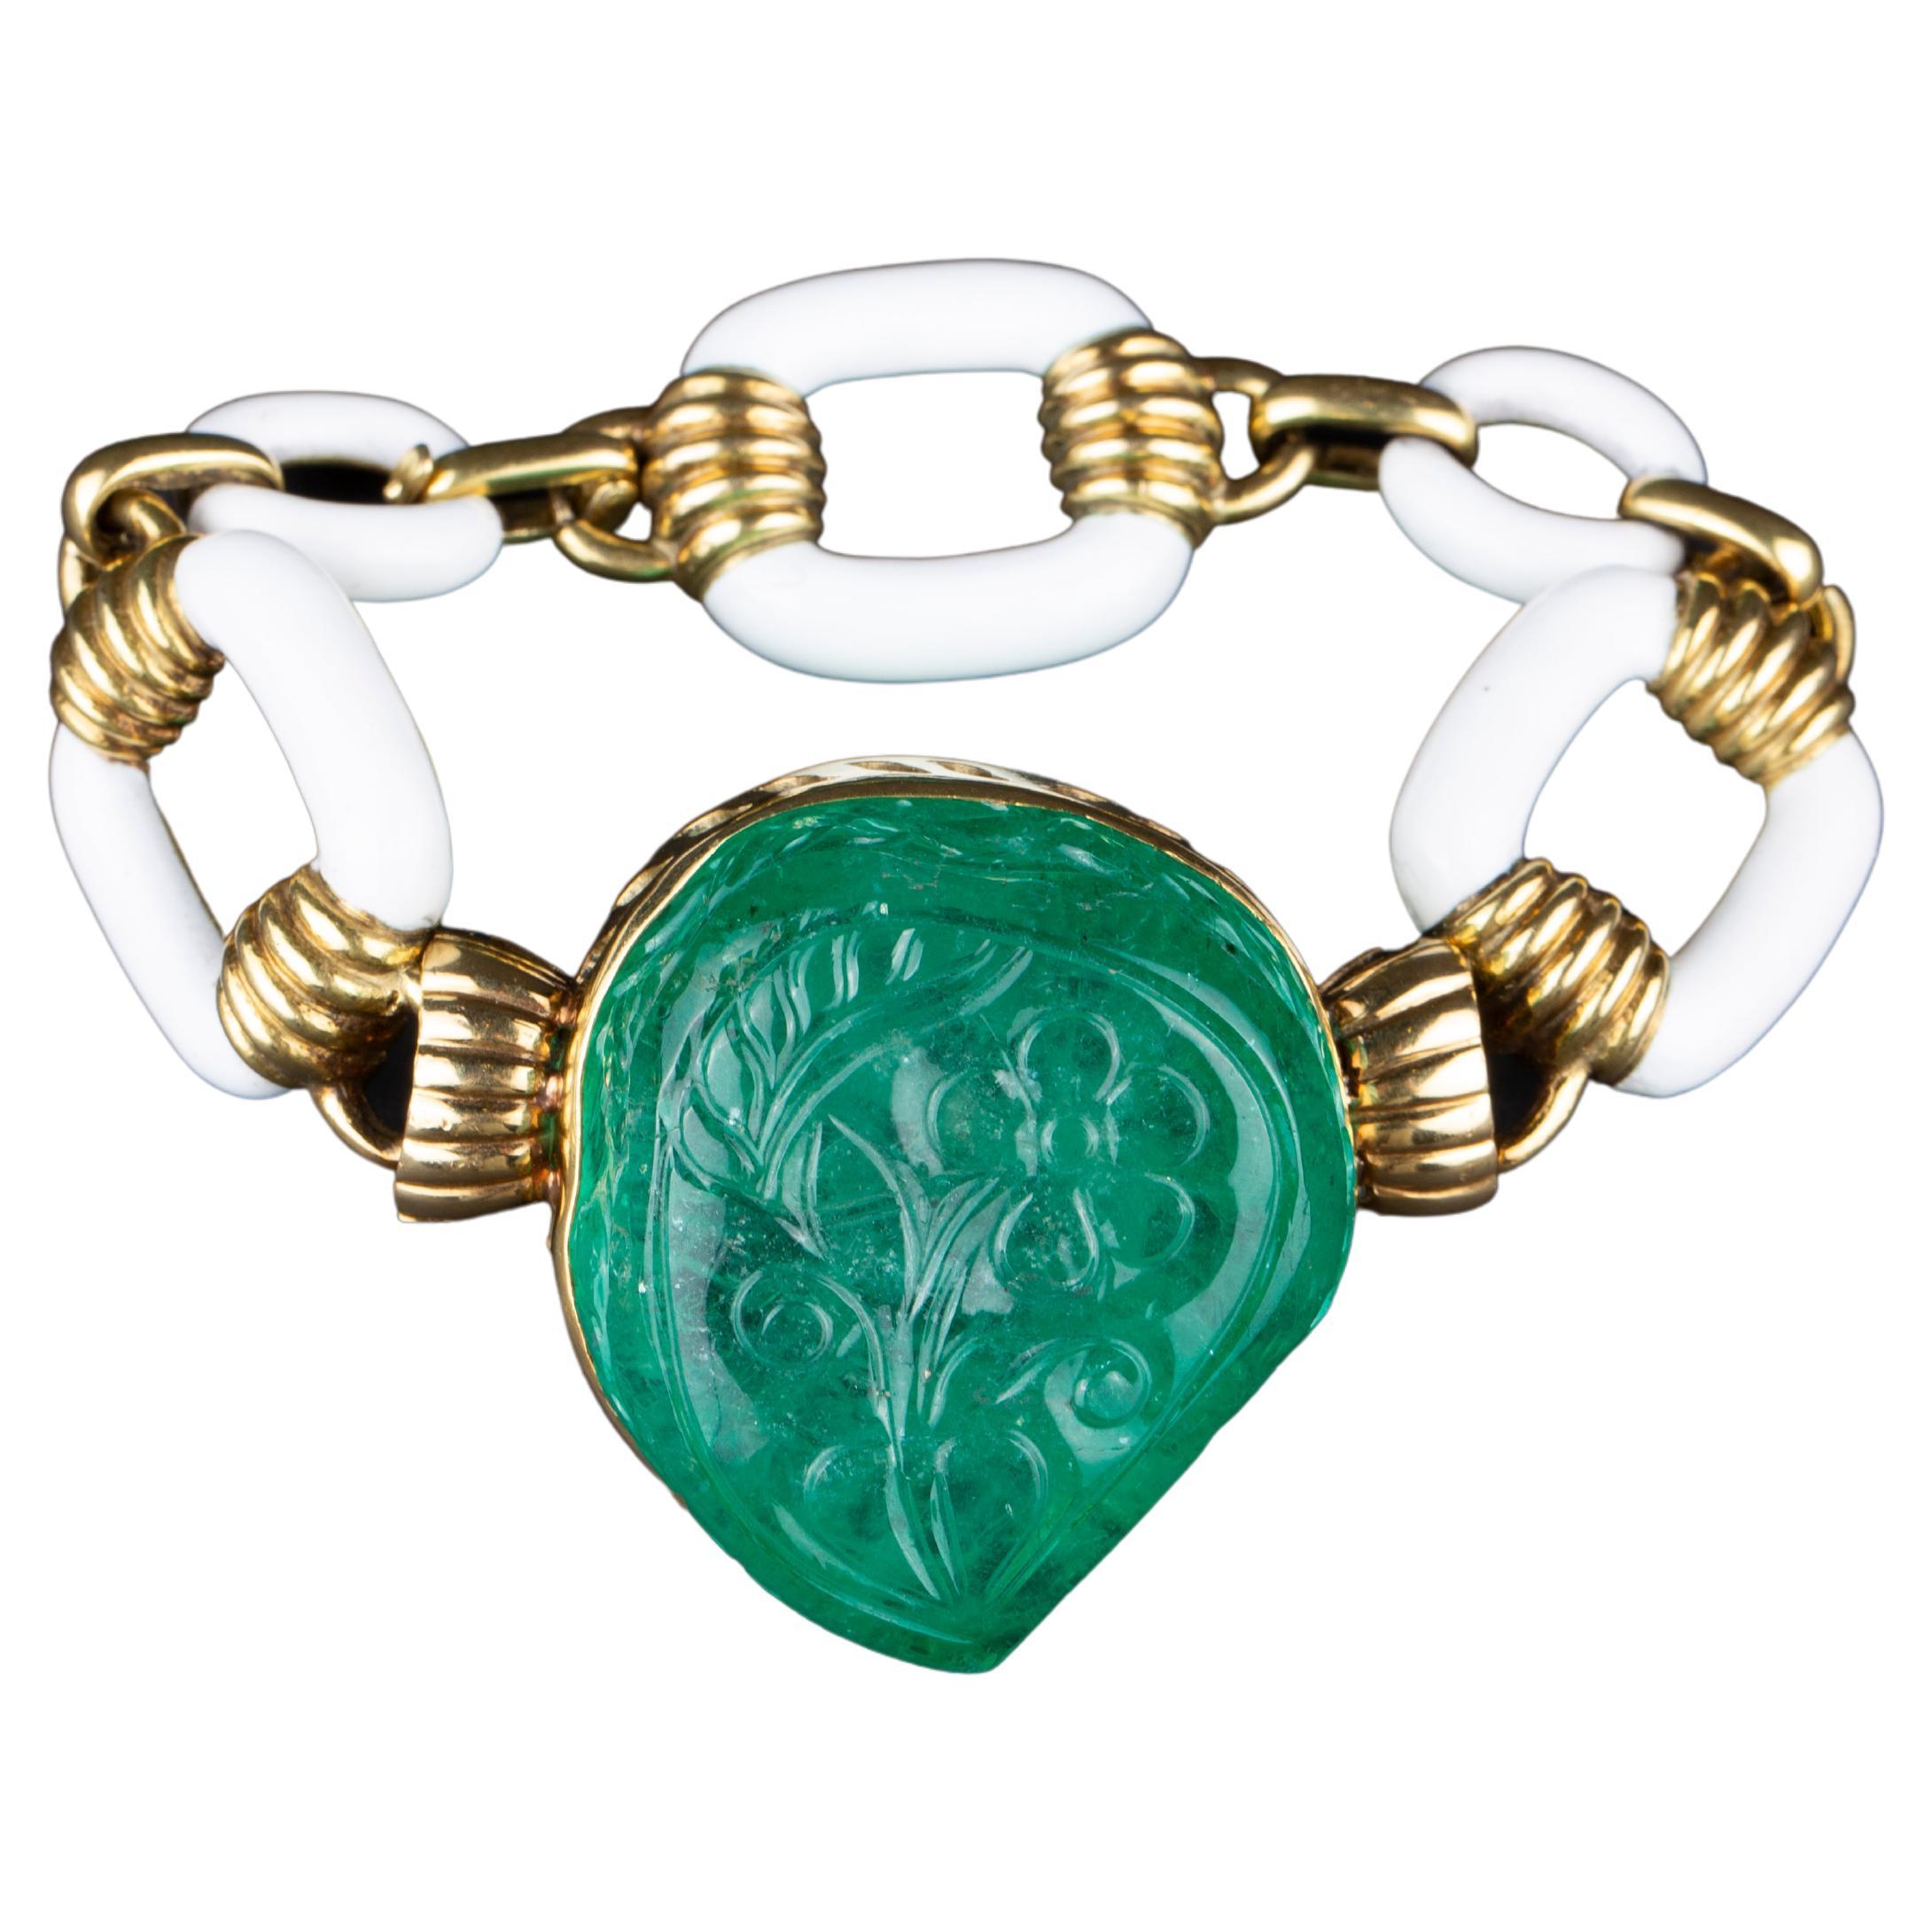 David Webb Carved Emerald and White Enamel Bracelet 